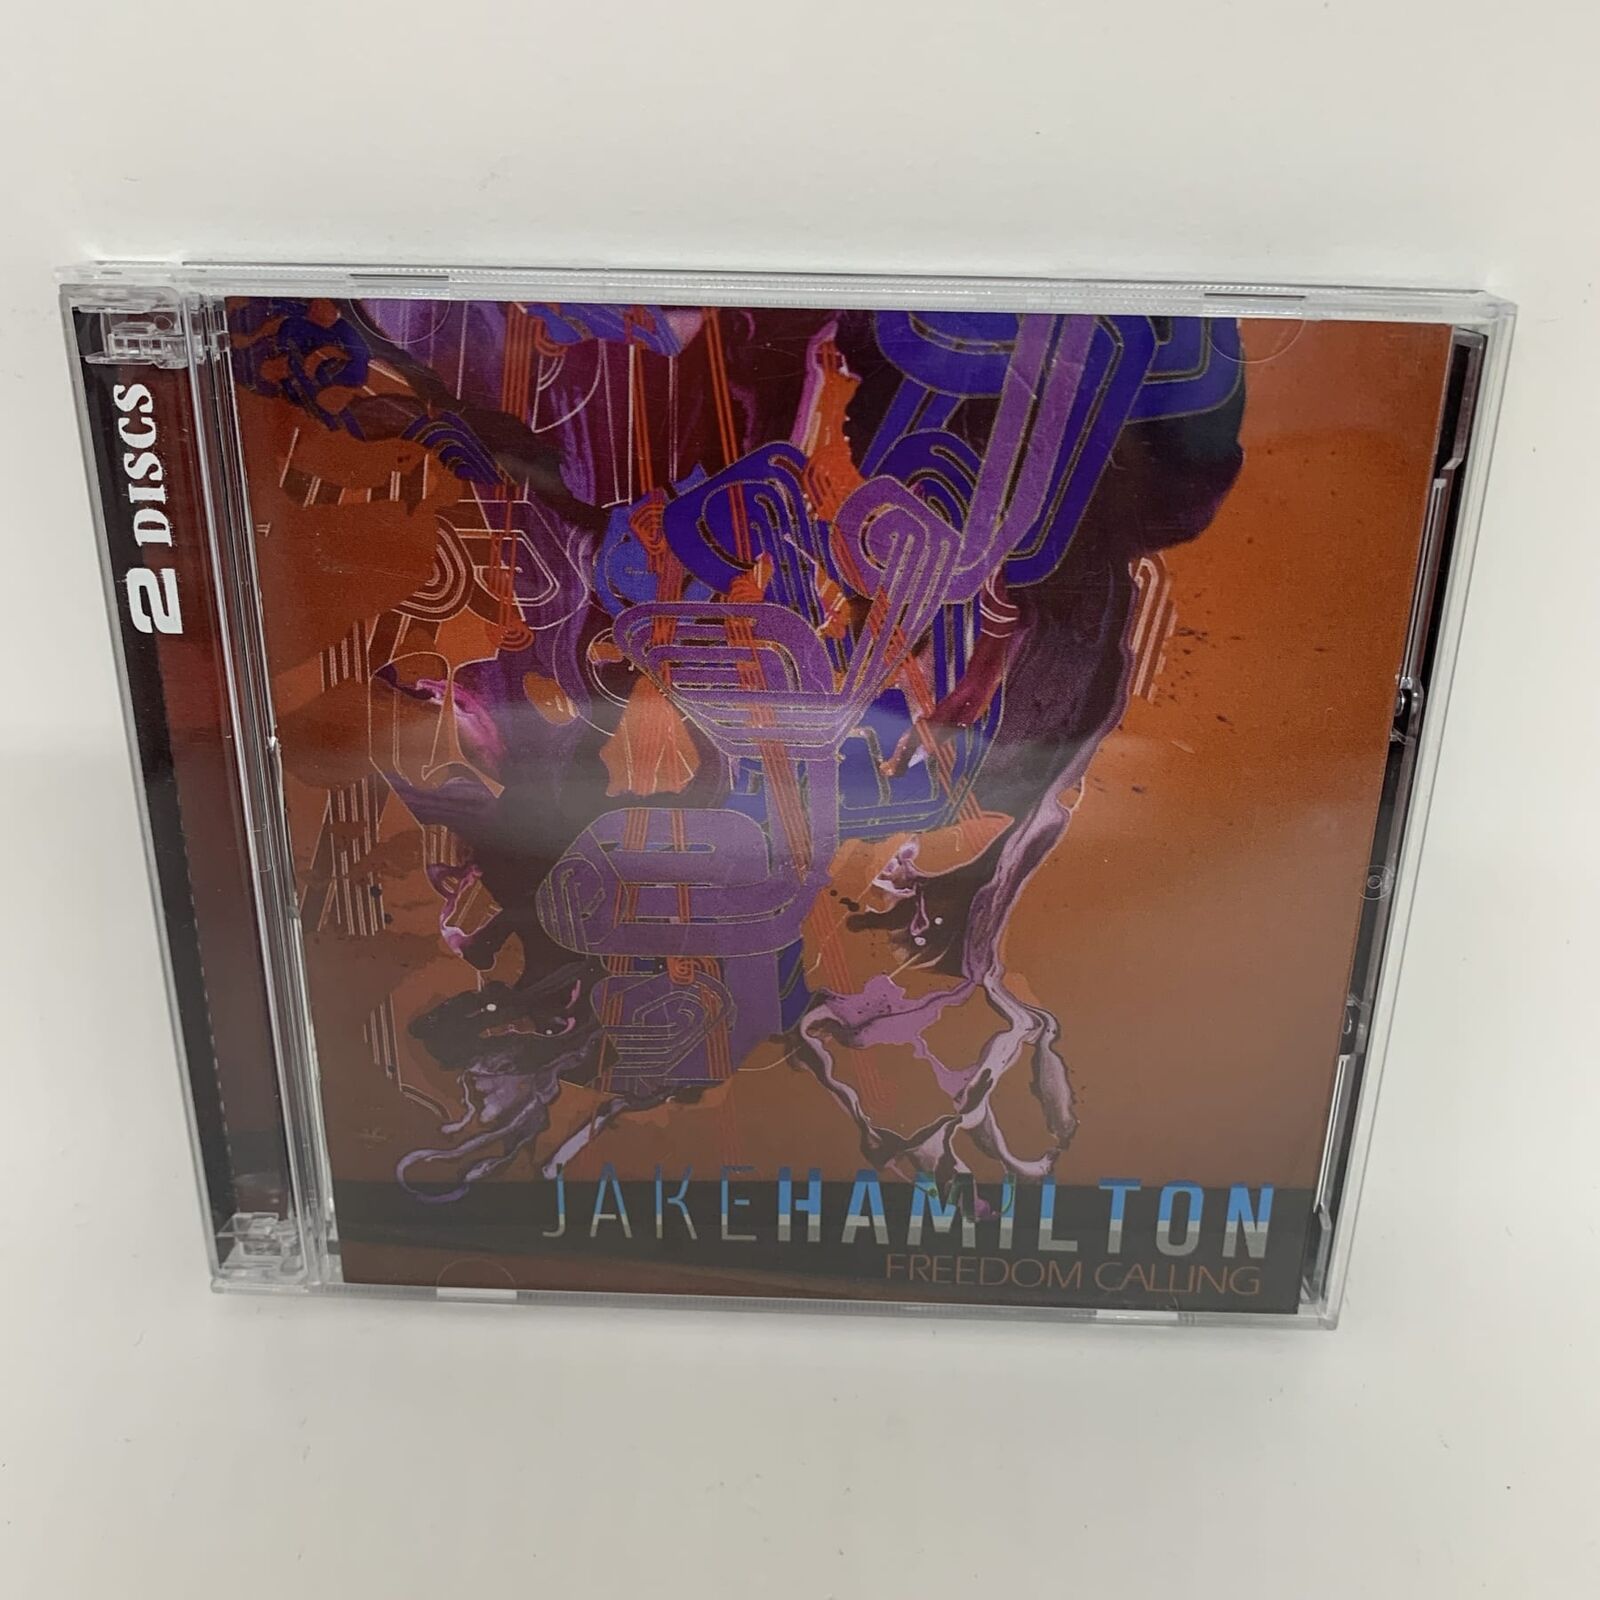 Jake Hamilton FREEDOM CALLING *2 Disc* CD Album GOOD CONDITION Free Postage